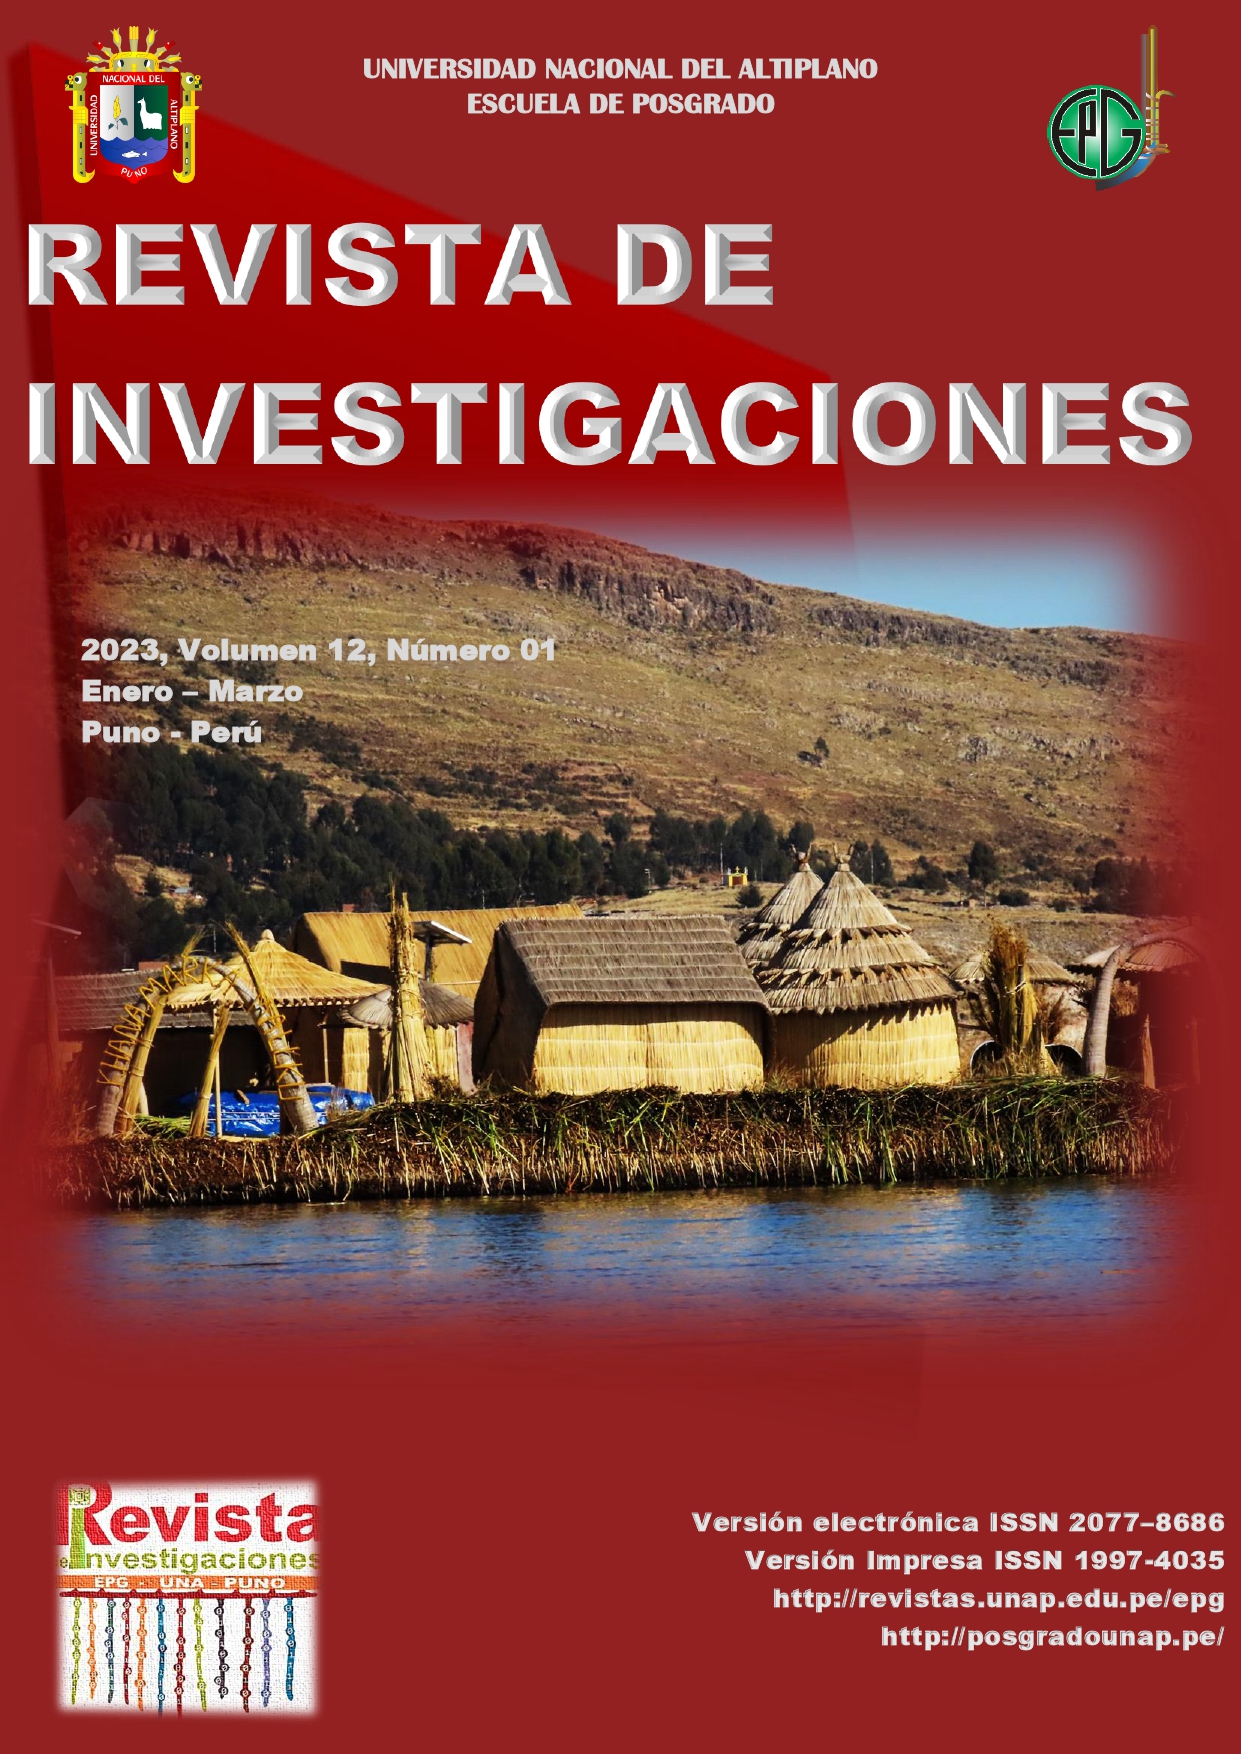 "Revista de Investigaciones"